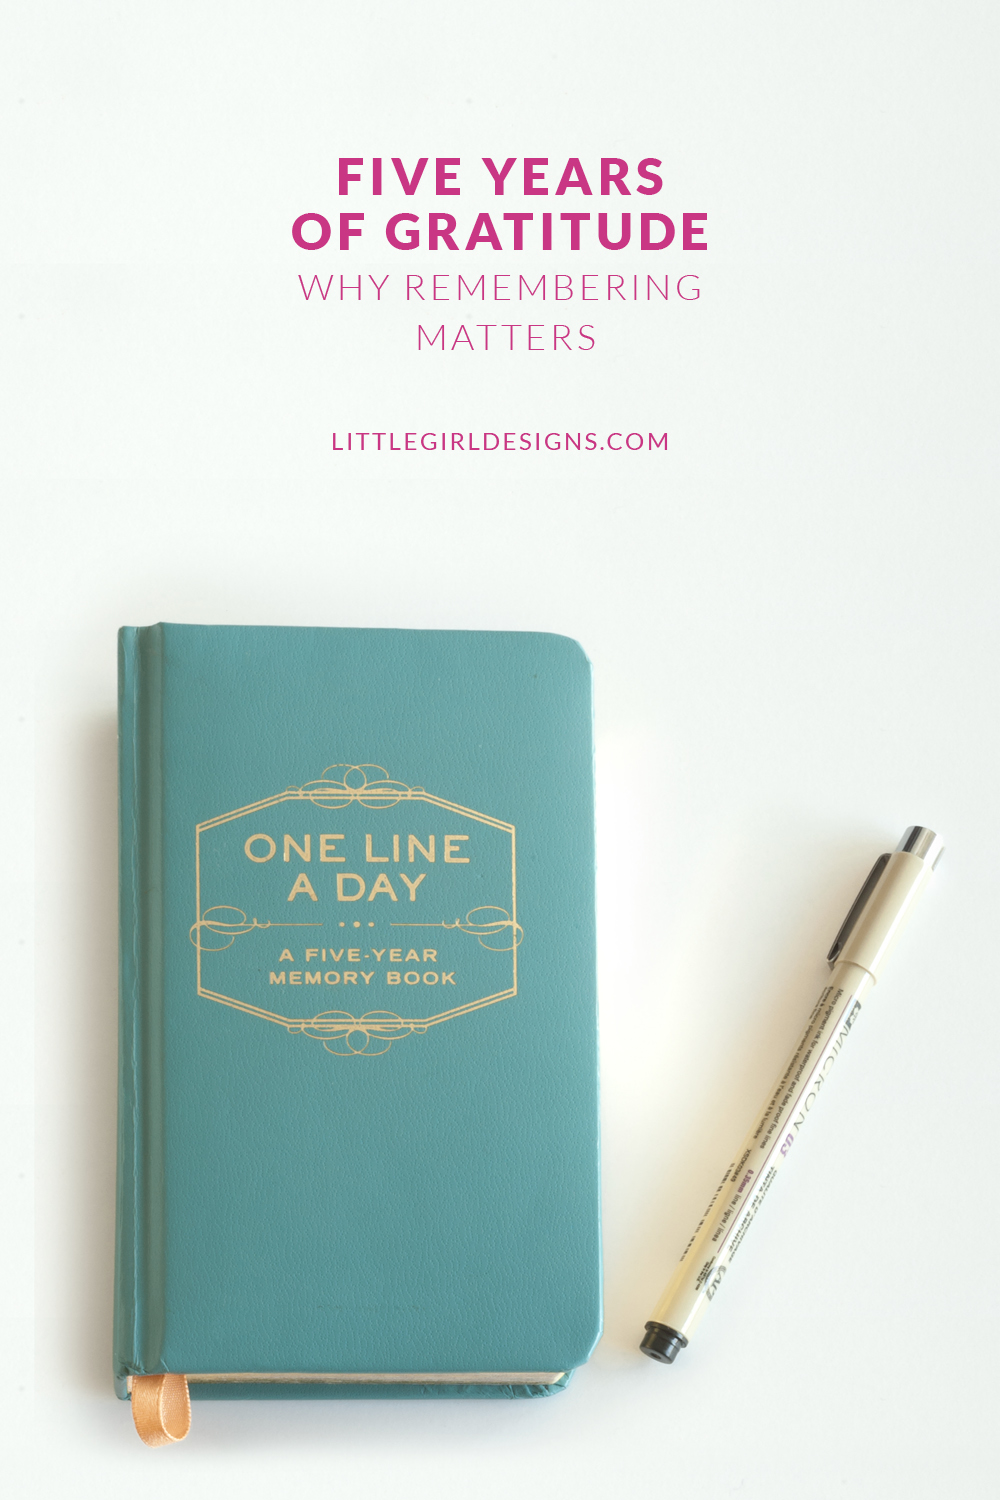 Five Years of Gratitude - Why Remembering is Important @littlegirldesigns.com